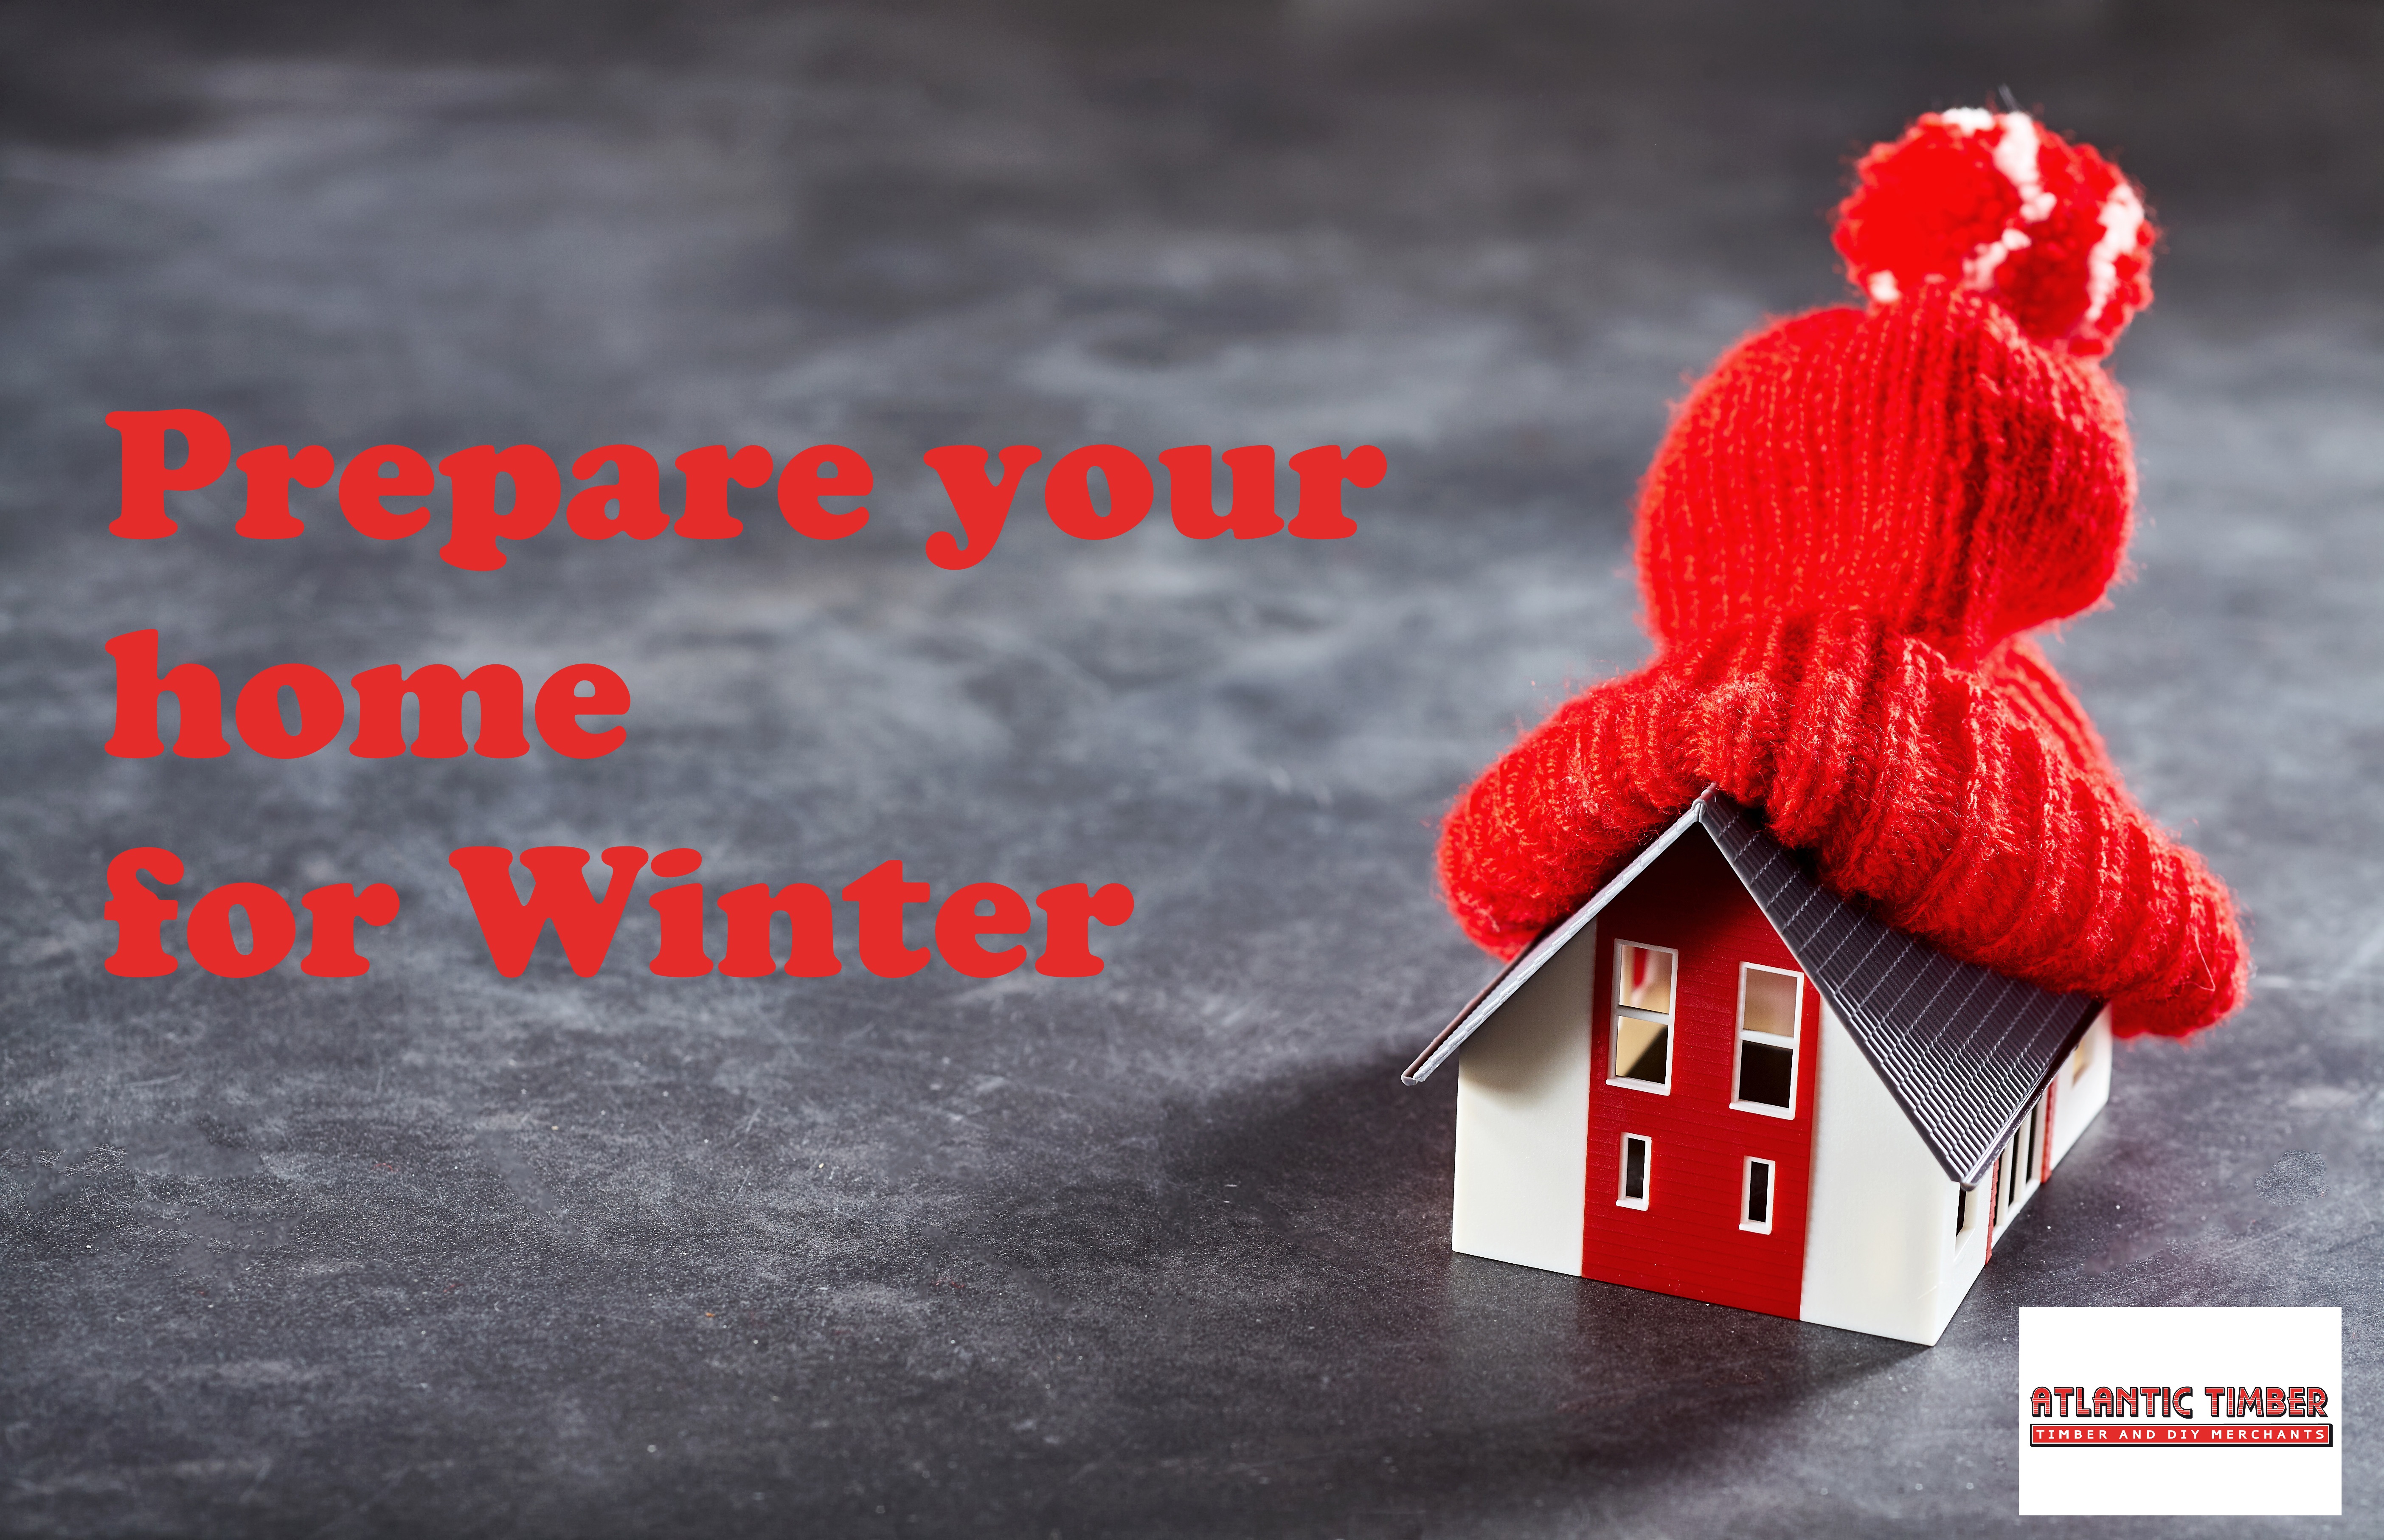 Prepare your home for Winter